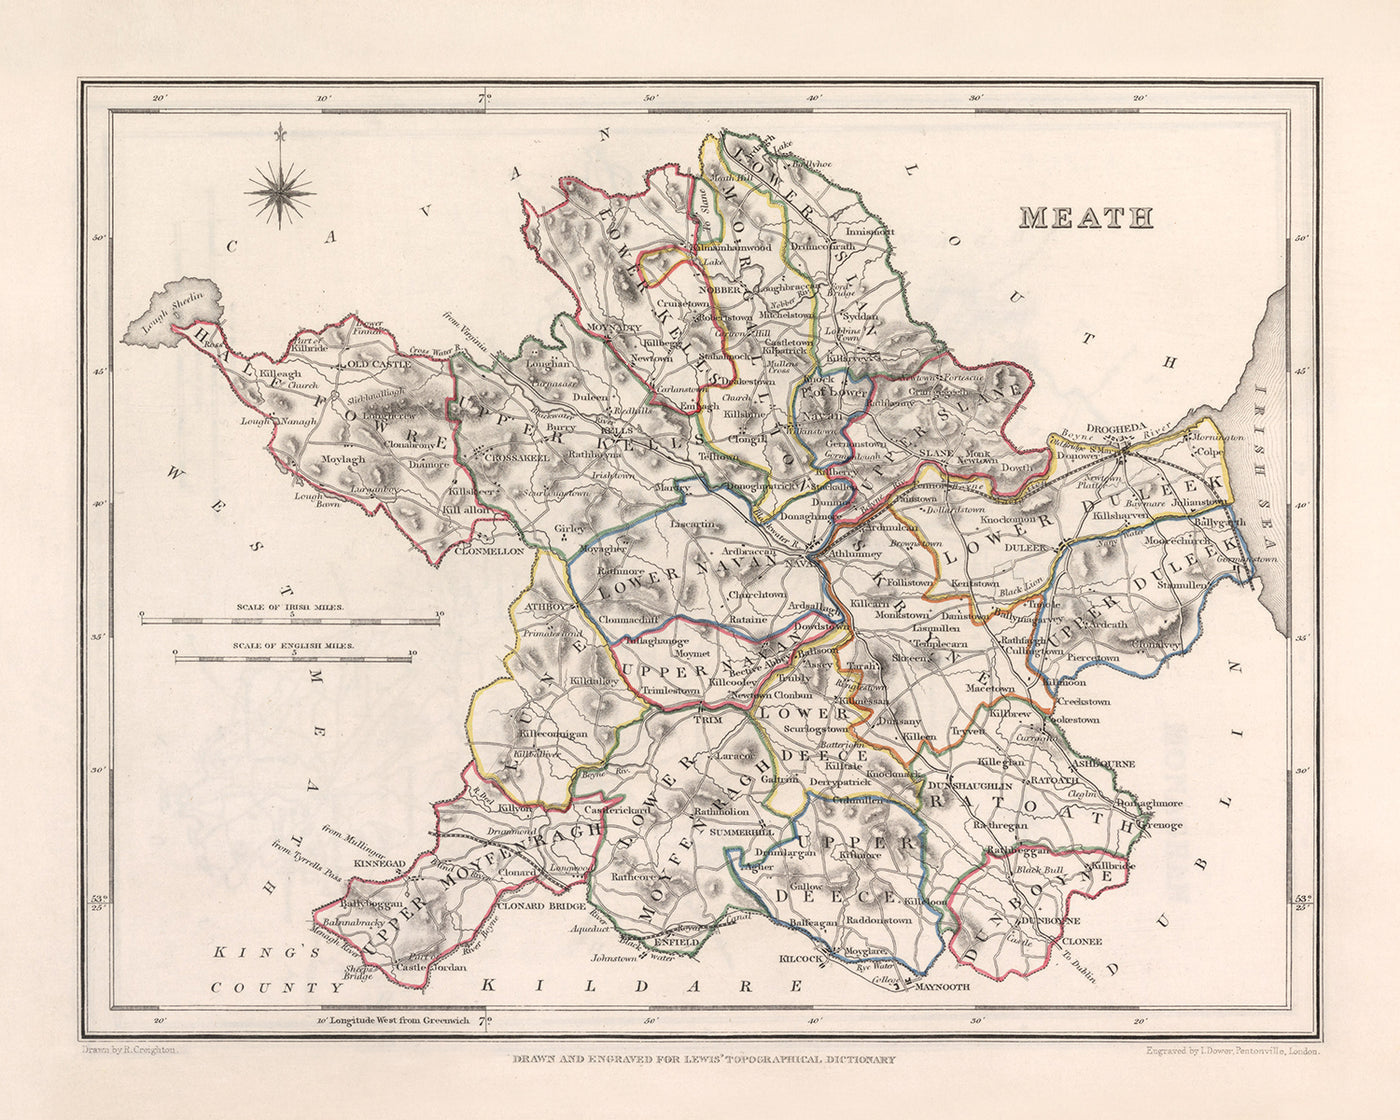 Old Map of County Meath by Samuel Lewis, 1844: Navan, Trim, Kells, Athboy, Hill of Tara